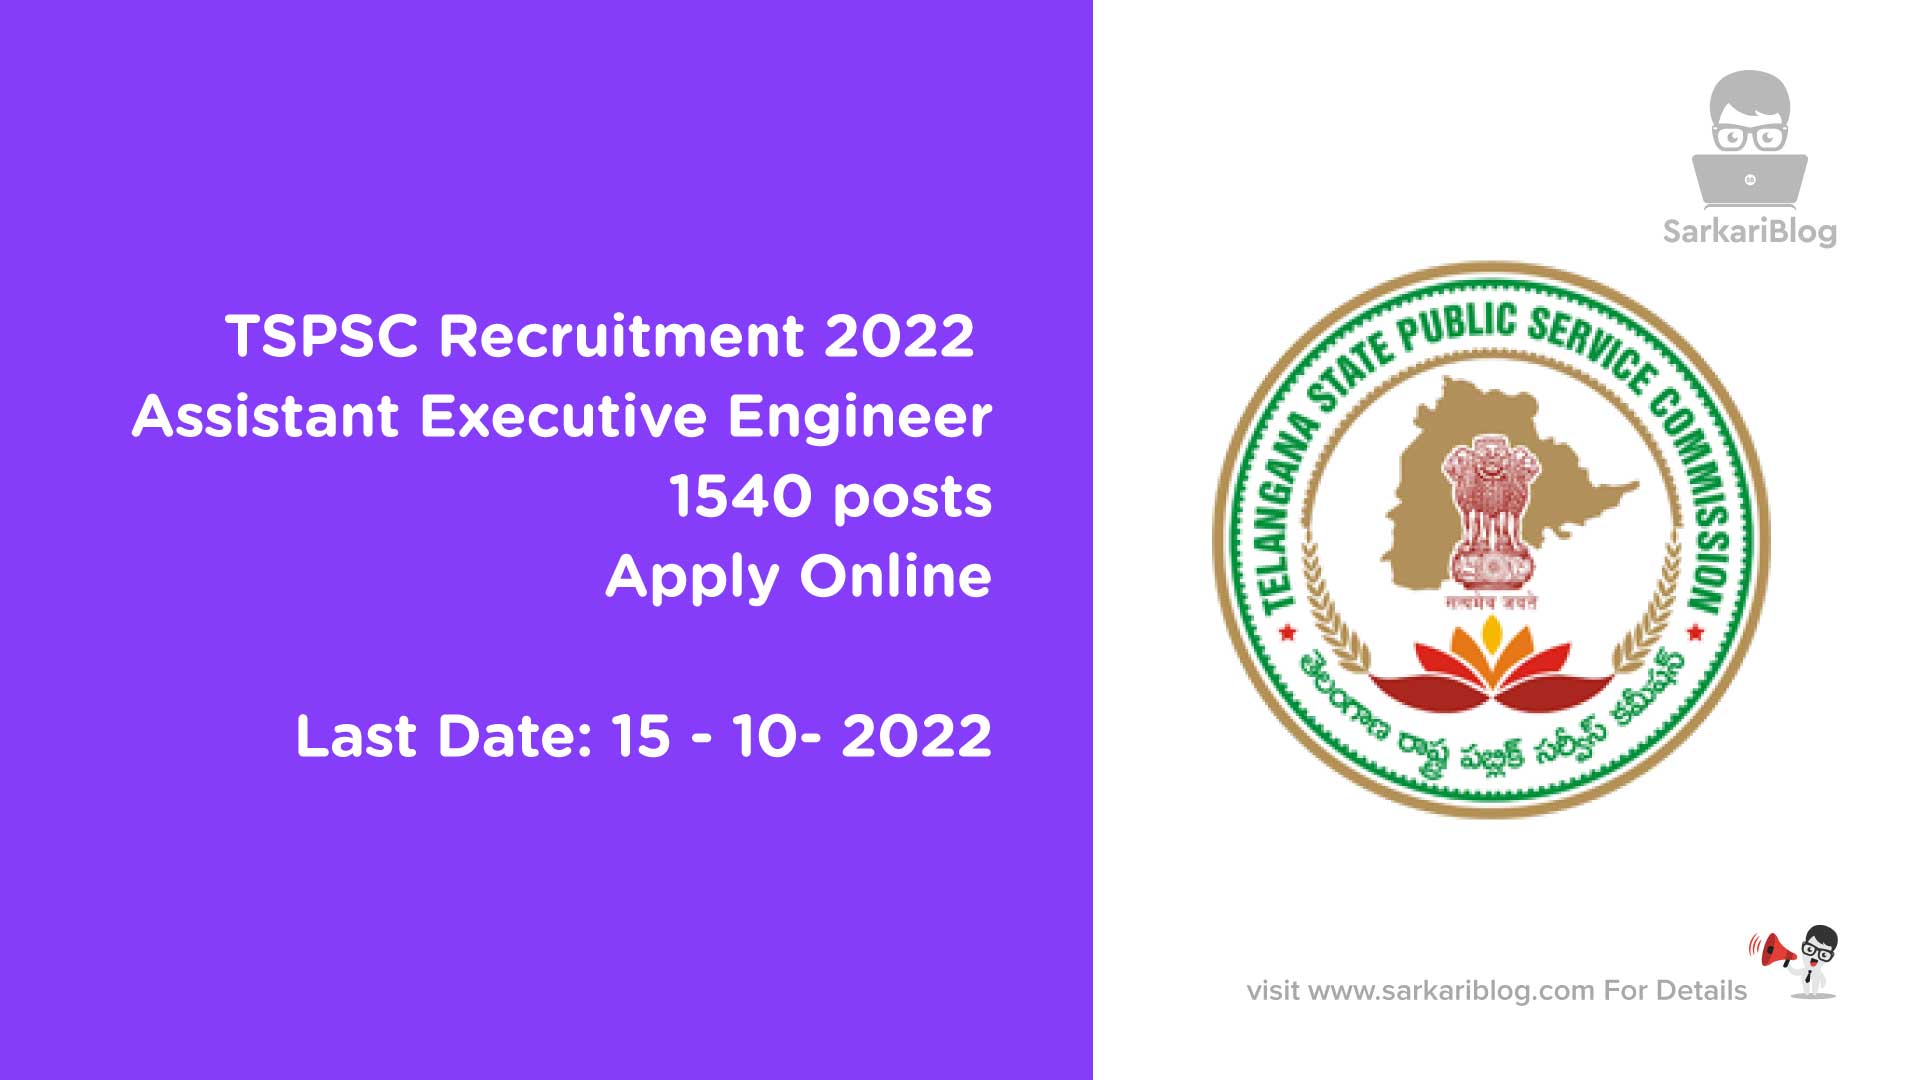 TSPSC AEE Recruitment 2022